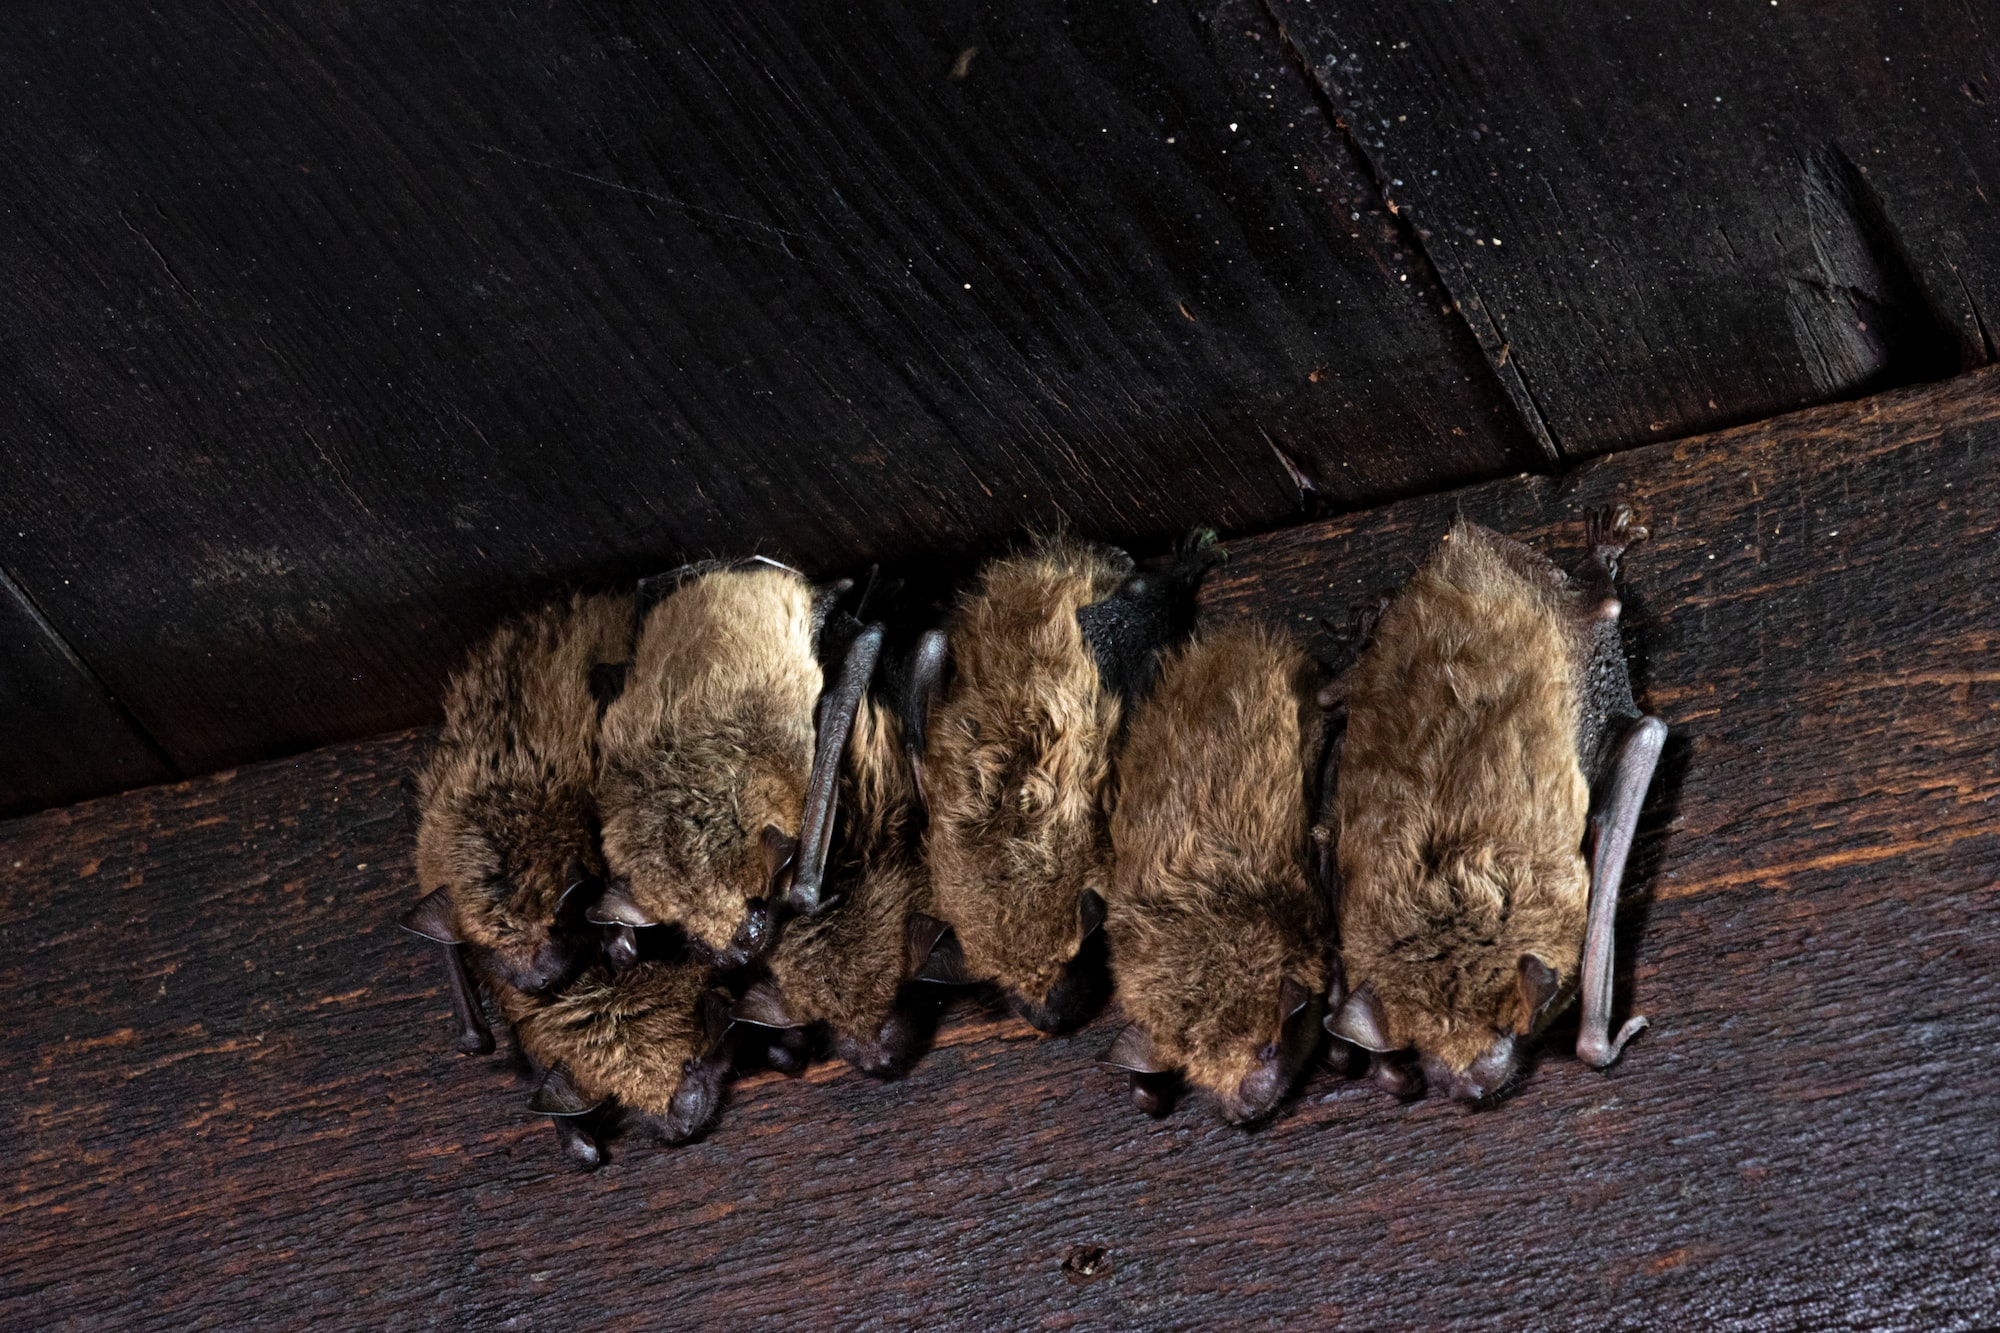 Photo of Bats